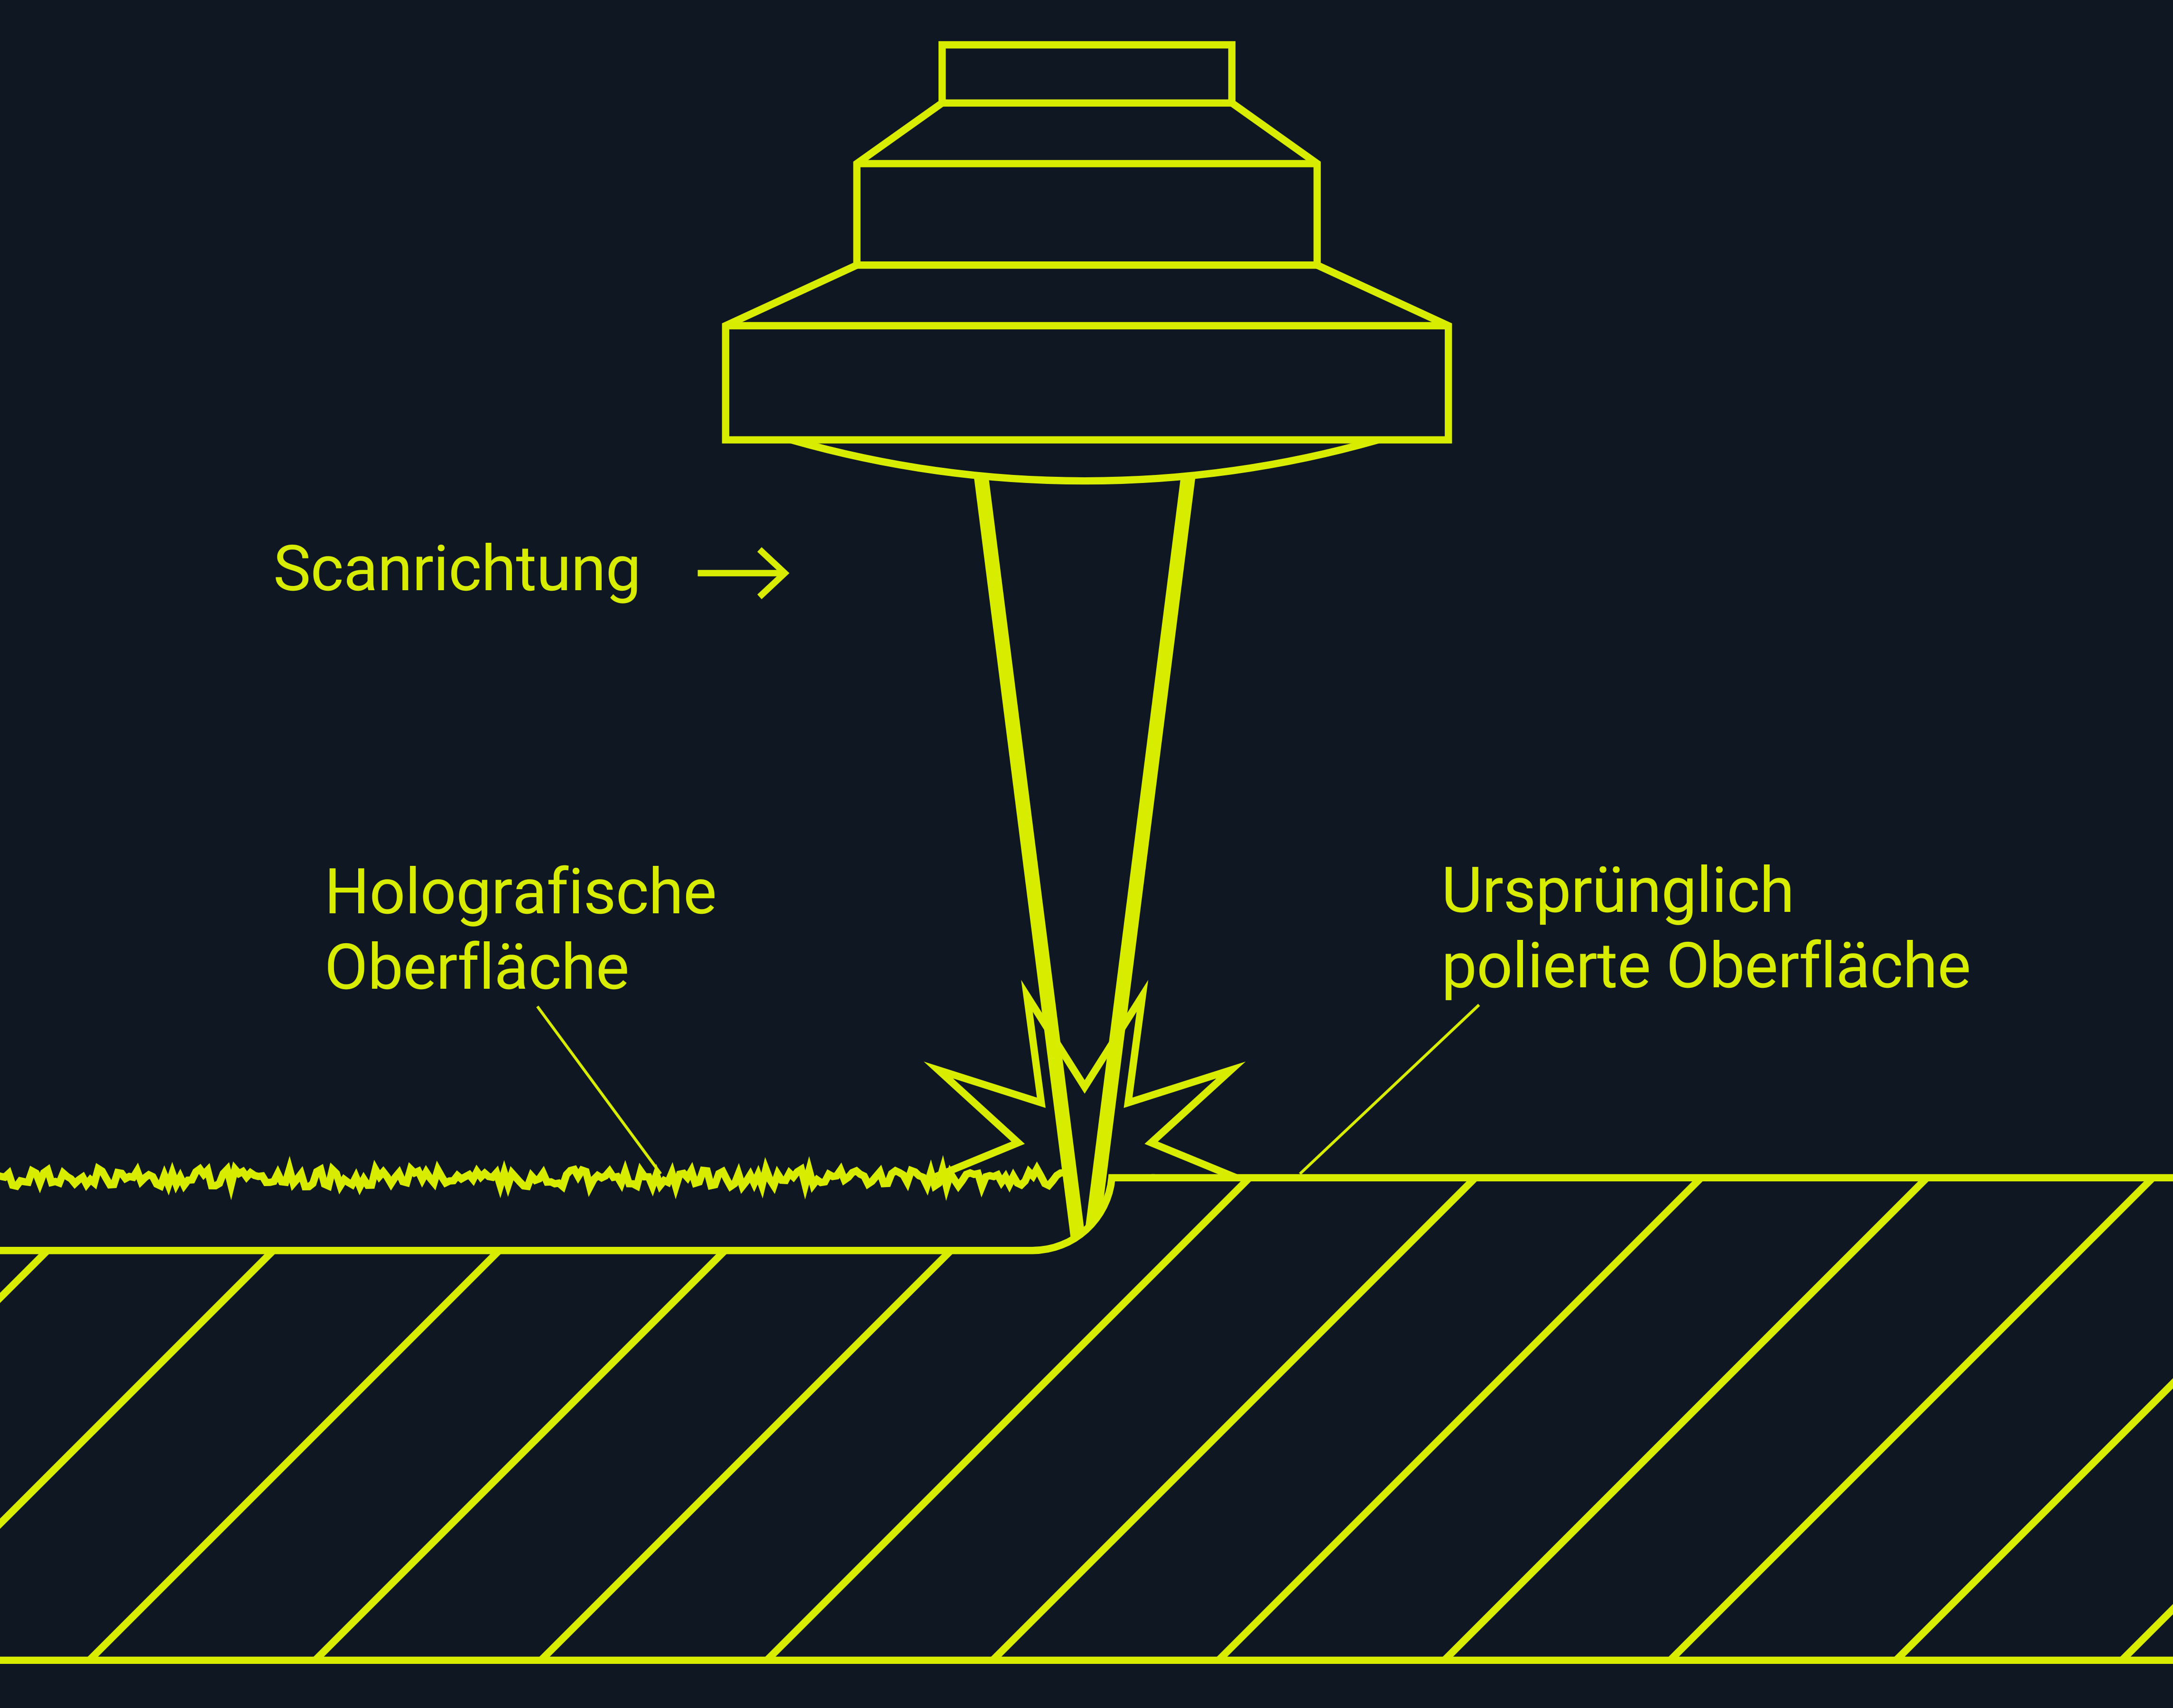 Veranschaulichung der Funktionsweise des holografischen Laserbeschriftungsprozesses.